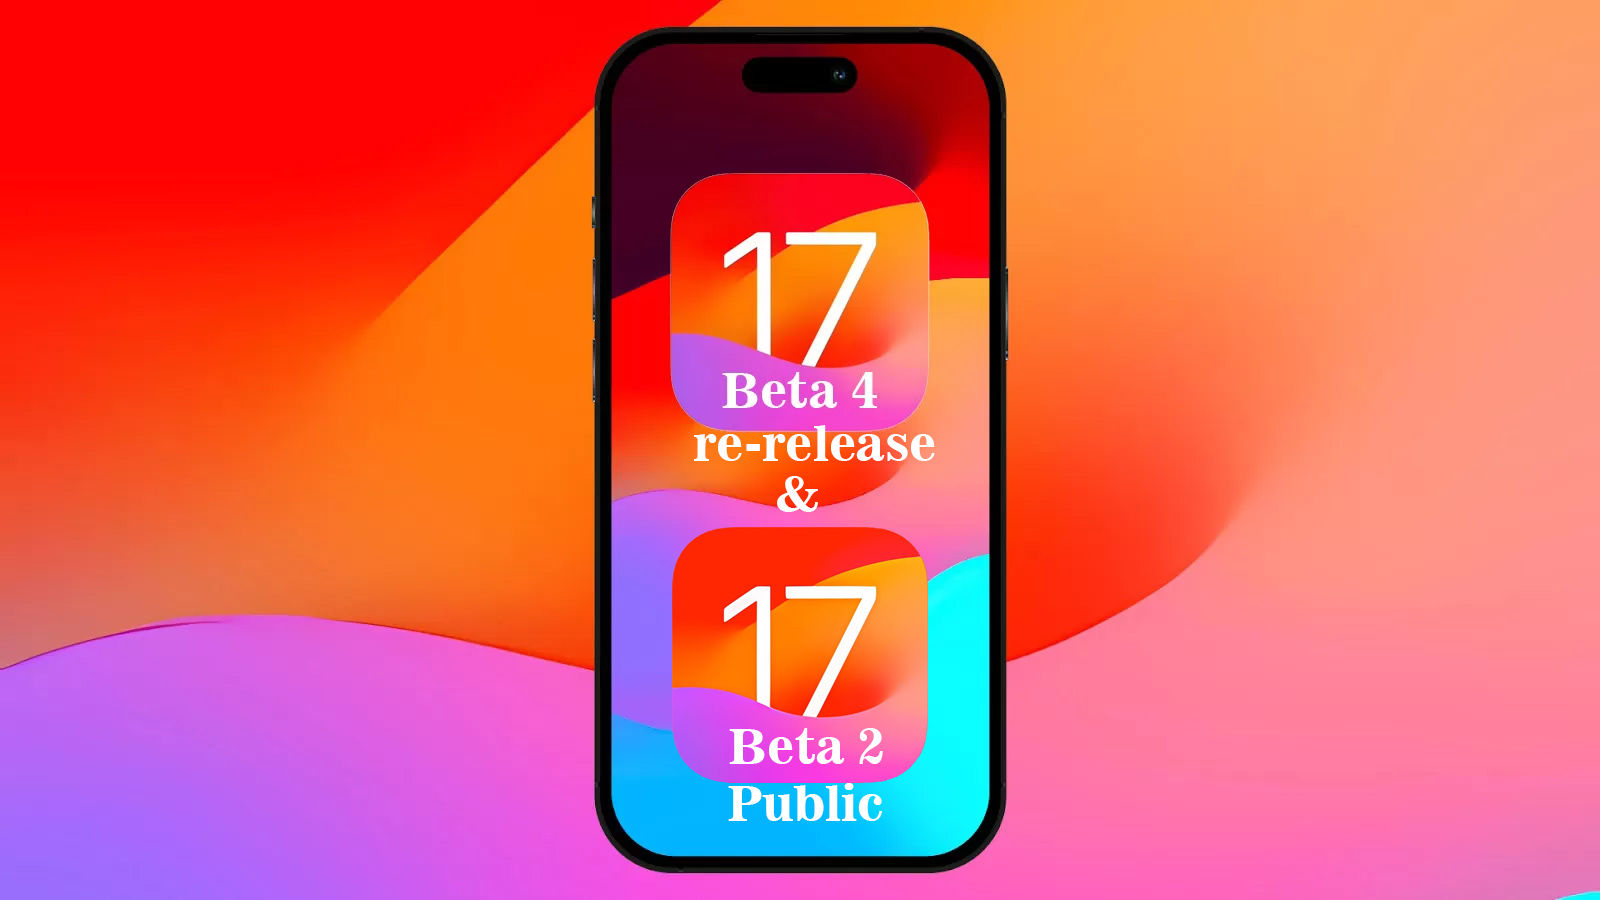 apple unveils ios 17 public beta 2 and beta 4 re-release